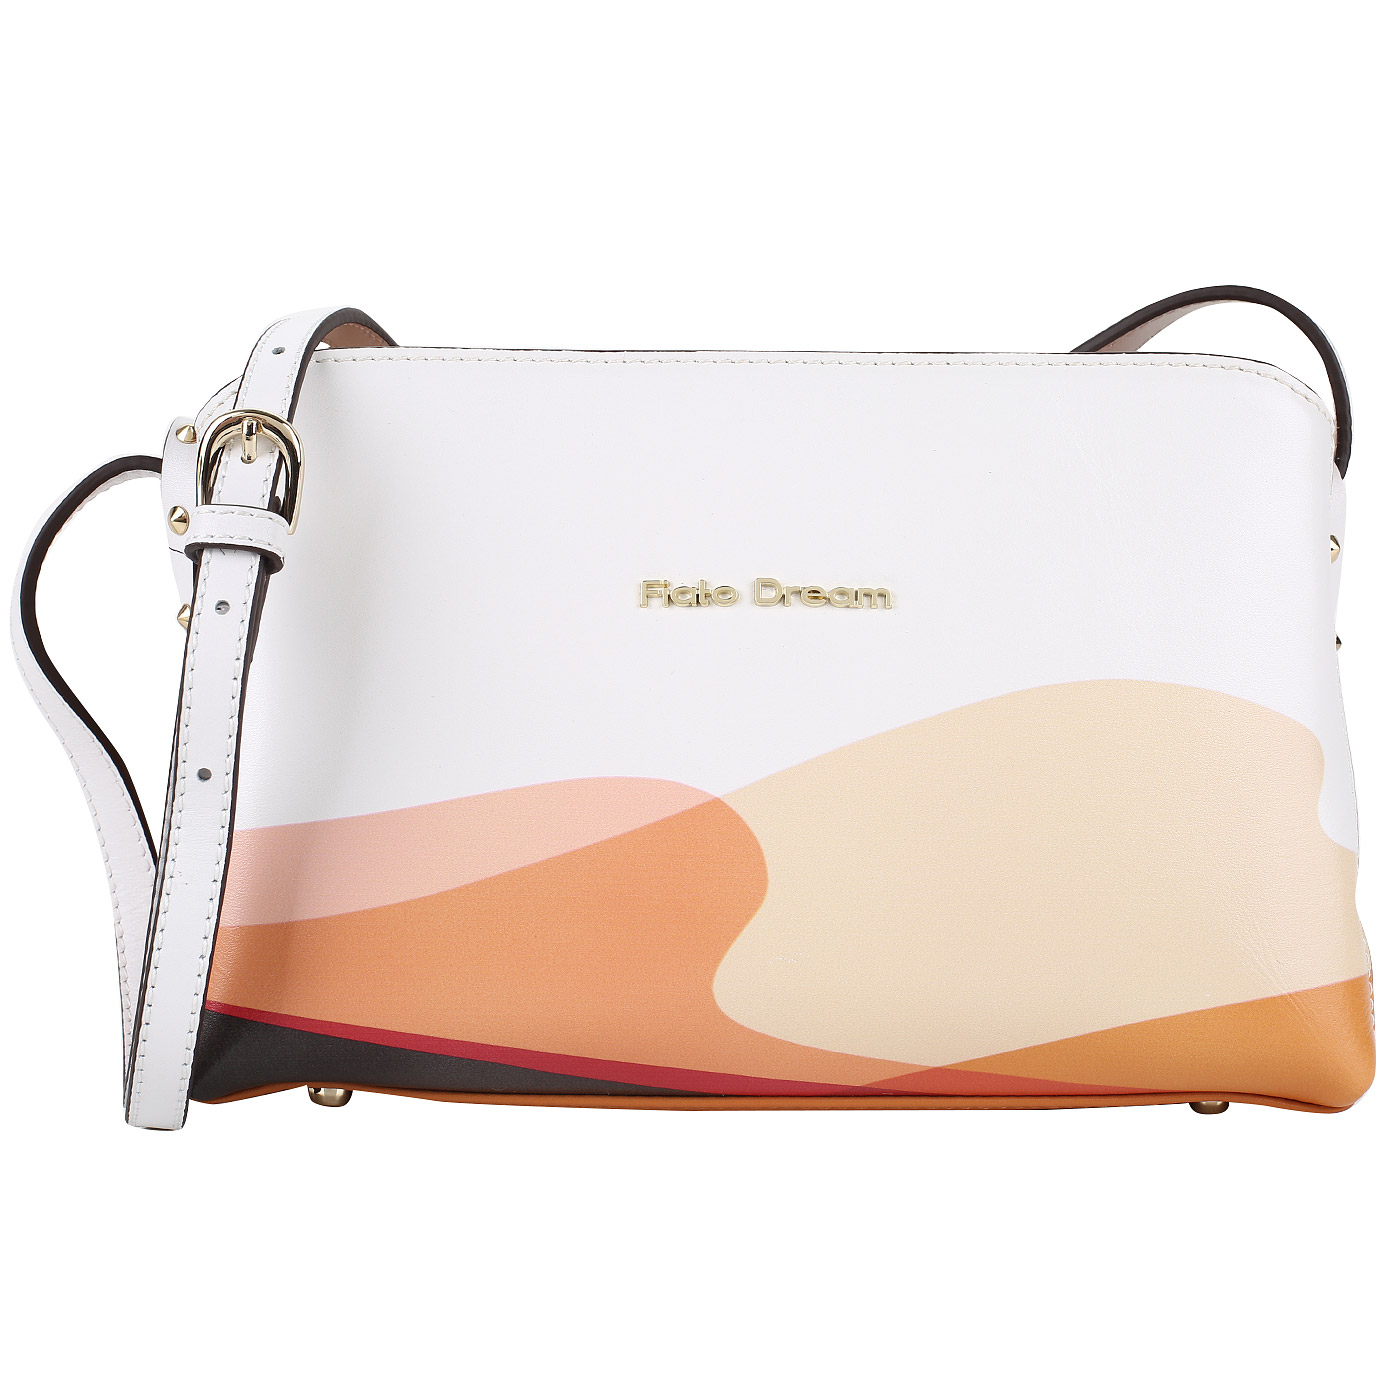 Fiato Dream Женская кожаная сумочка с плечевым ремешком